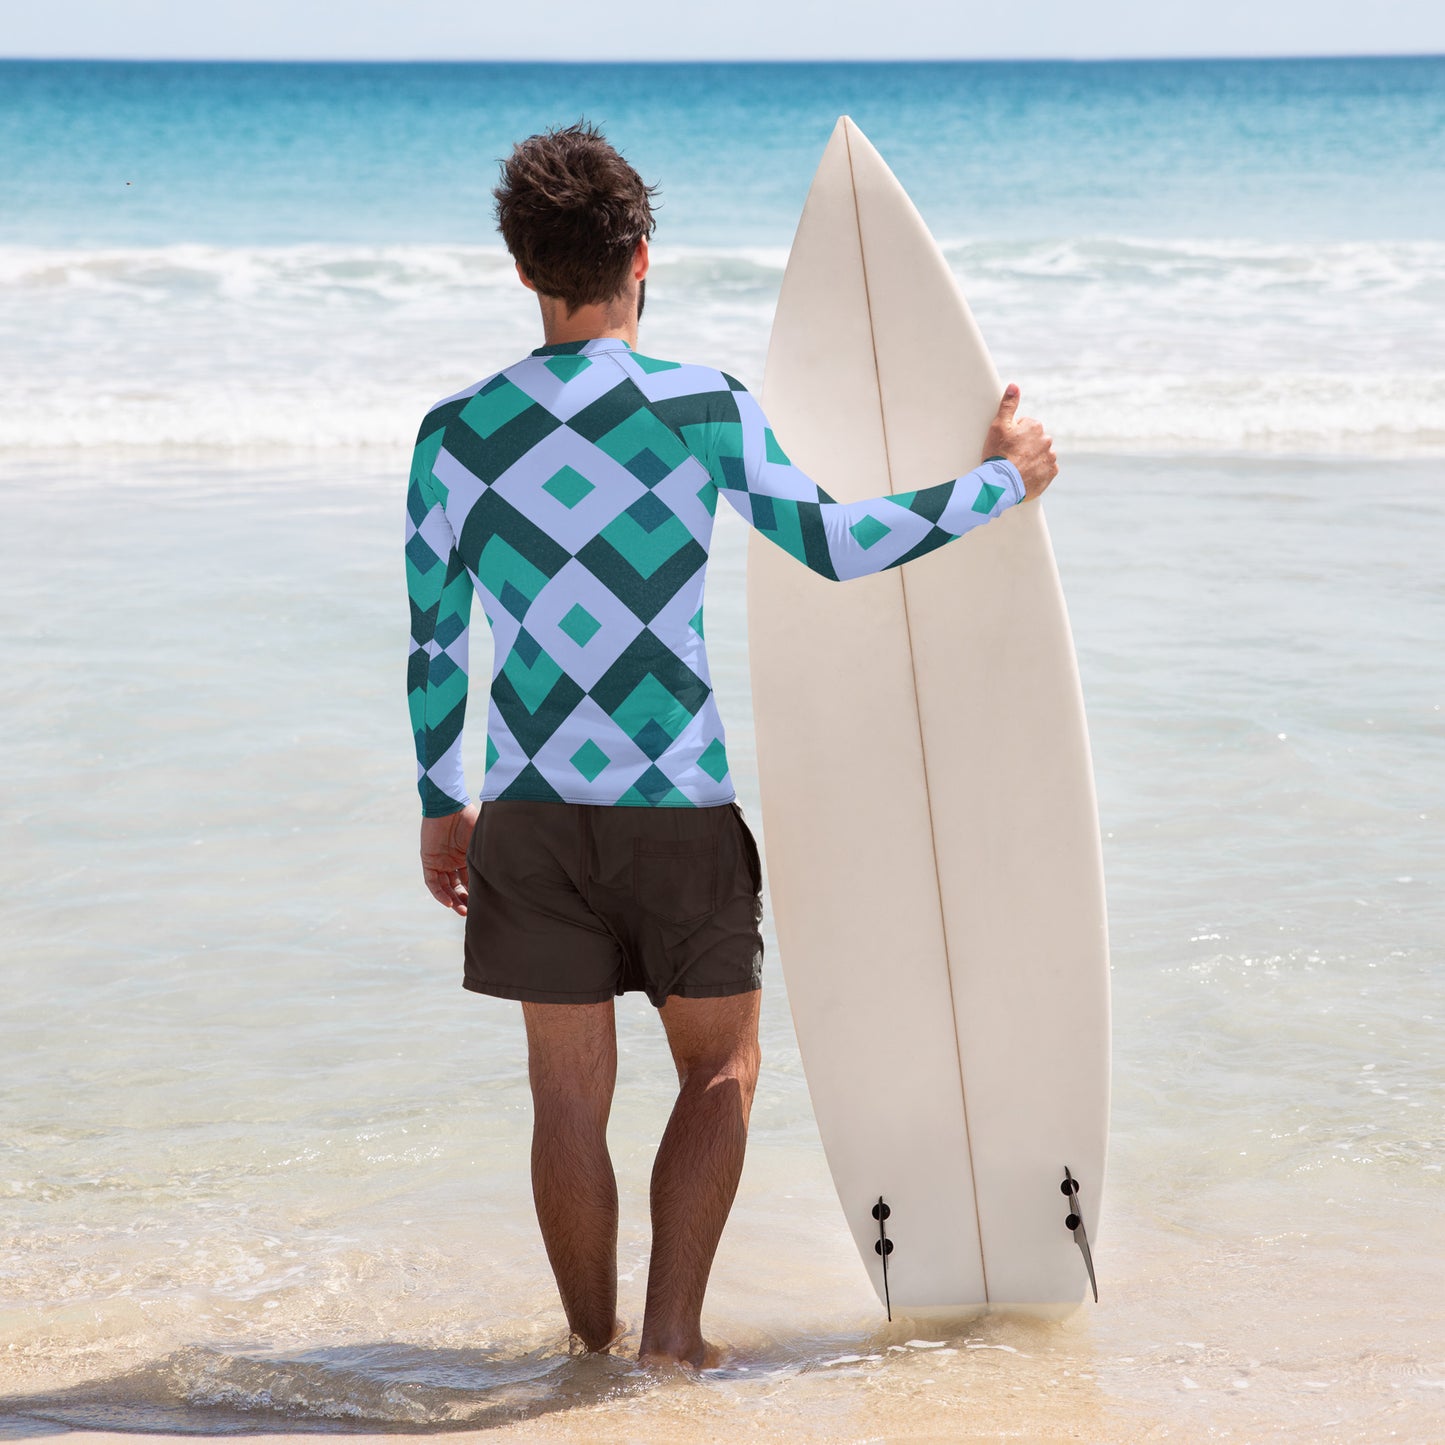 Surf in Style: Men's High-Performance Rash Guard - Diamond Matrix